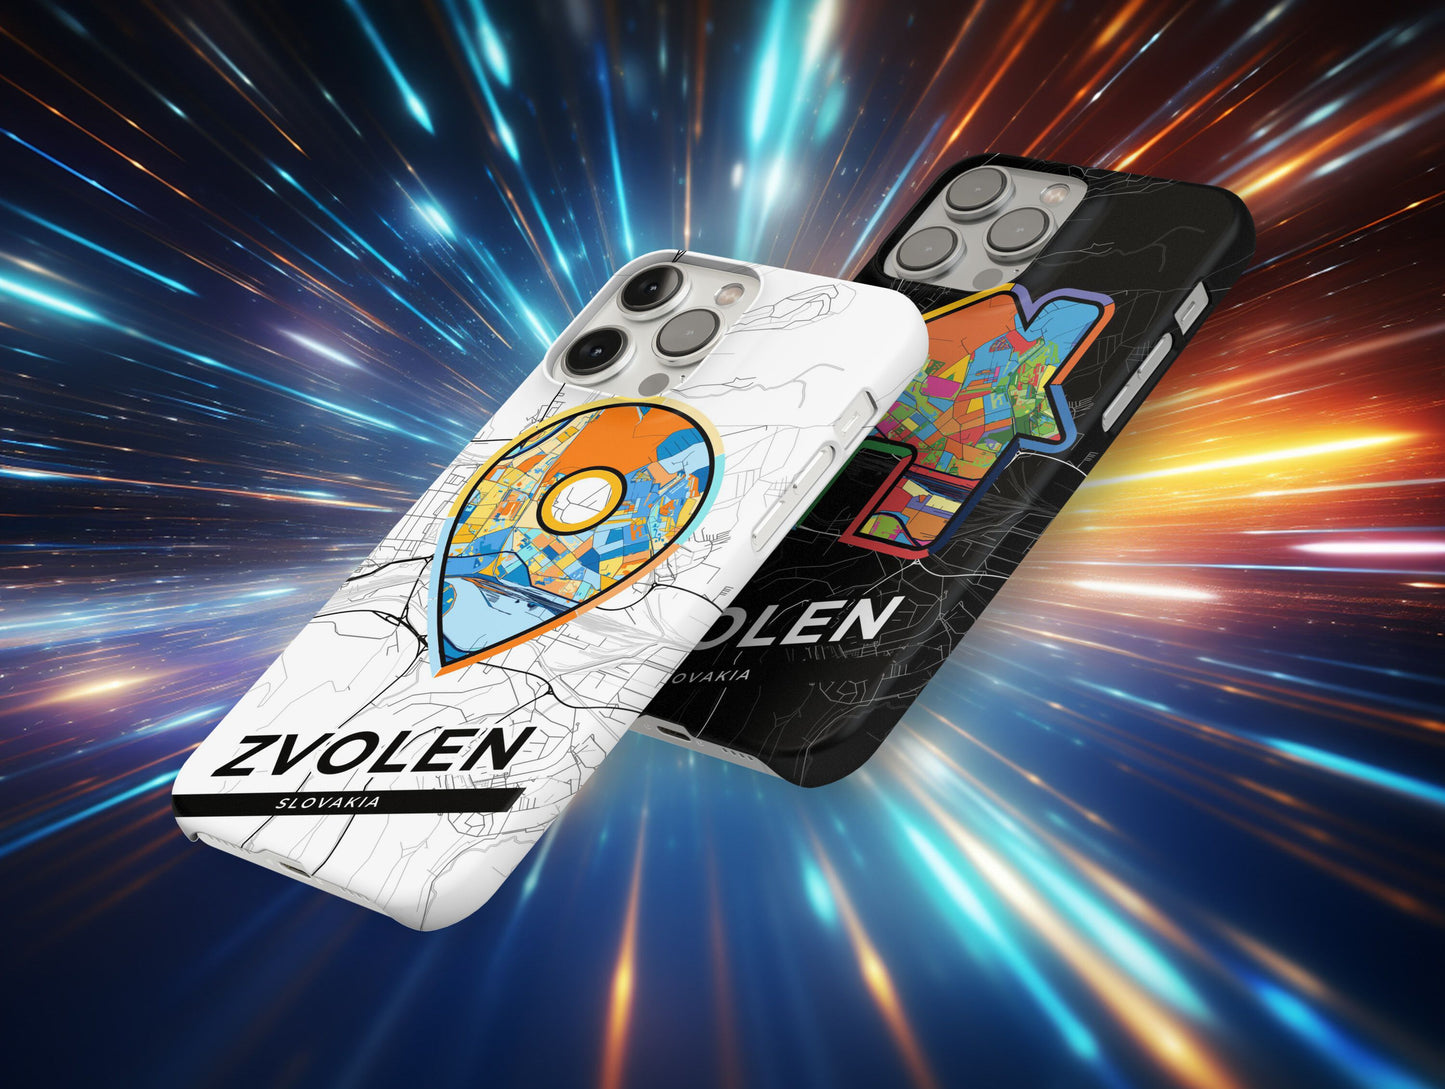 Zvolen Slovakia slim phone case with colorful icon